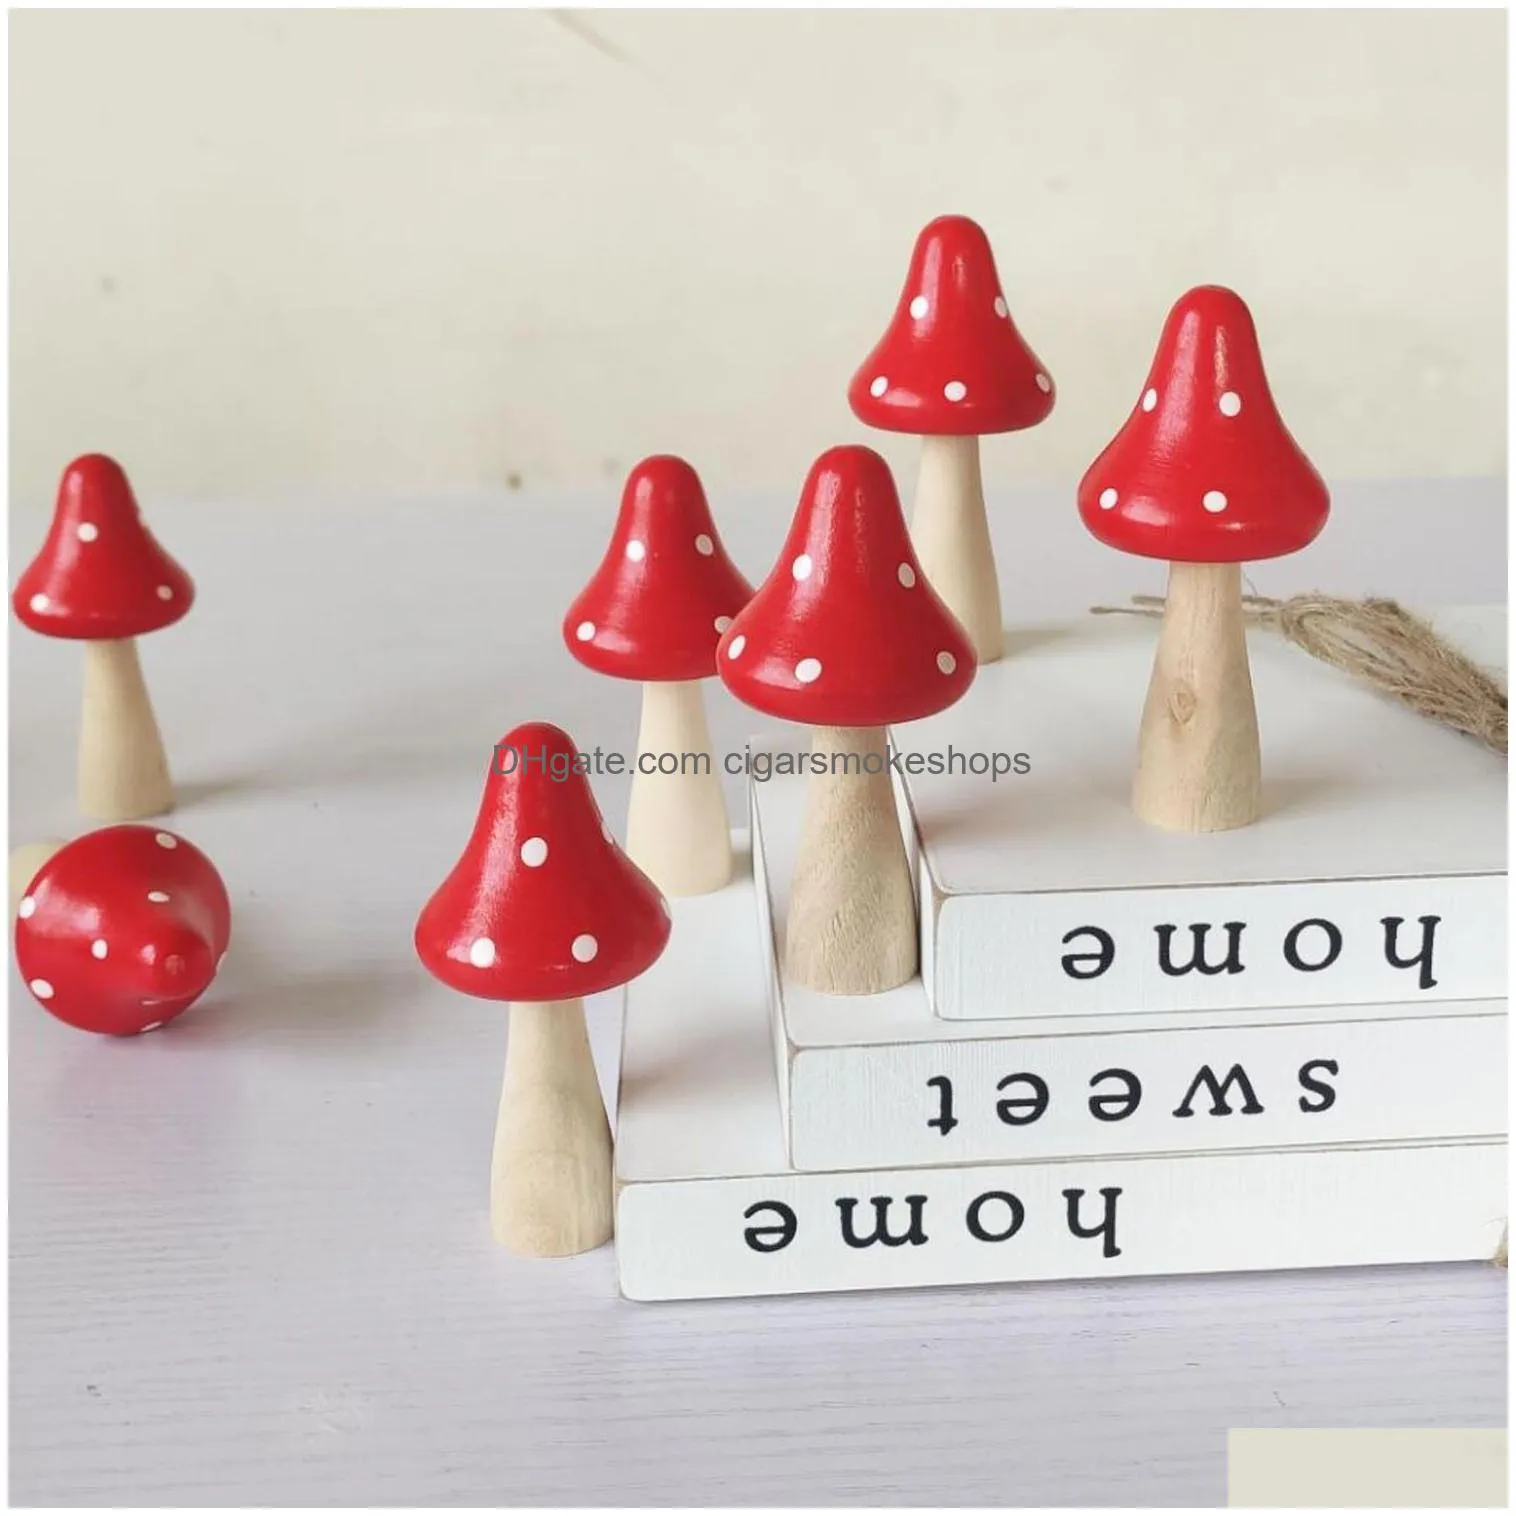 home decor mushrooms miniature figurines mini wooden fairy garden accessories flower pots micro landscape decoration xbjk2302